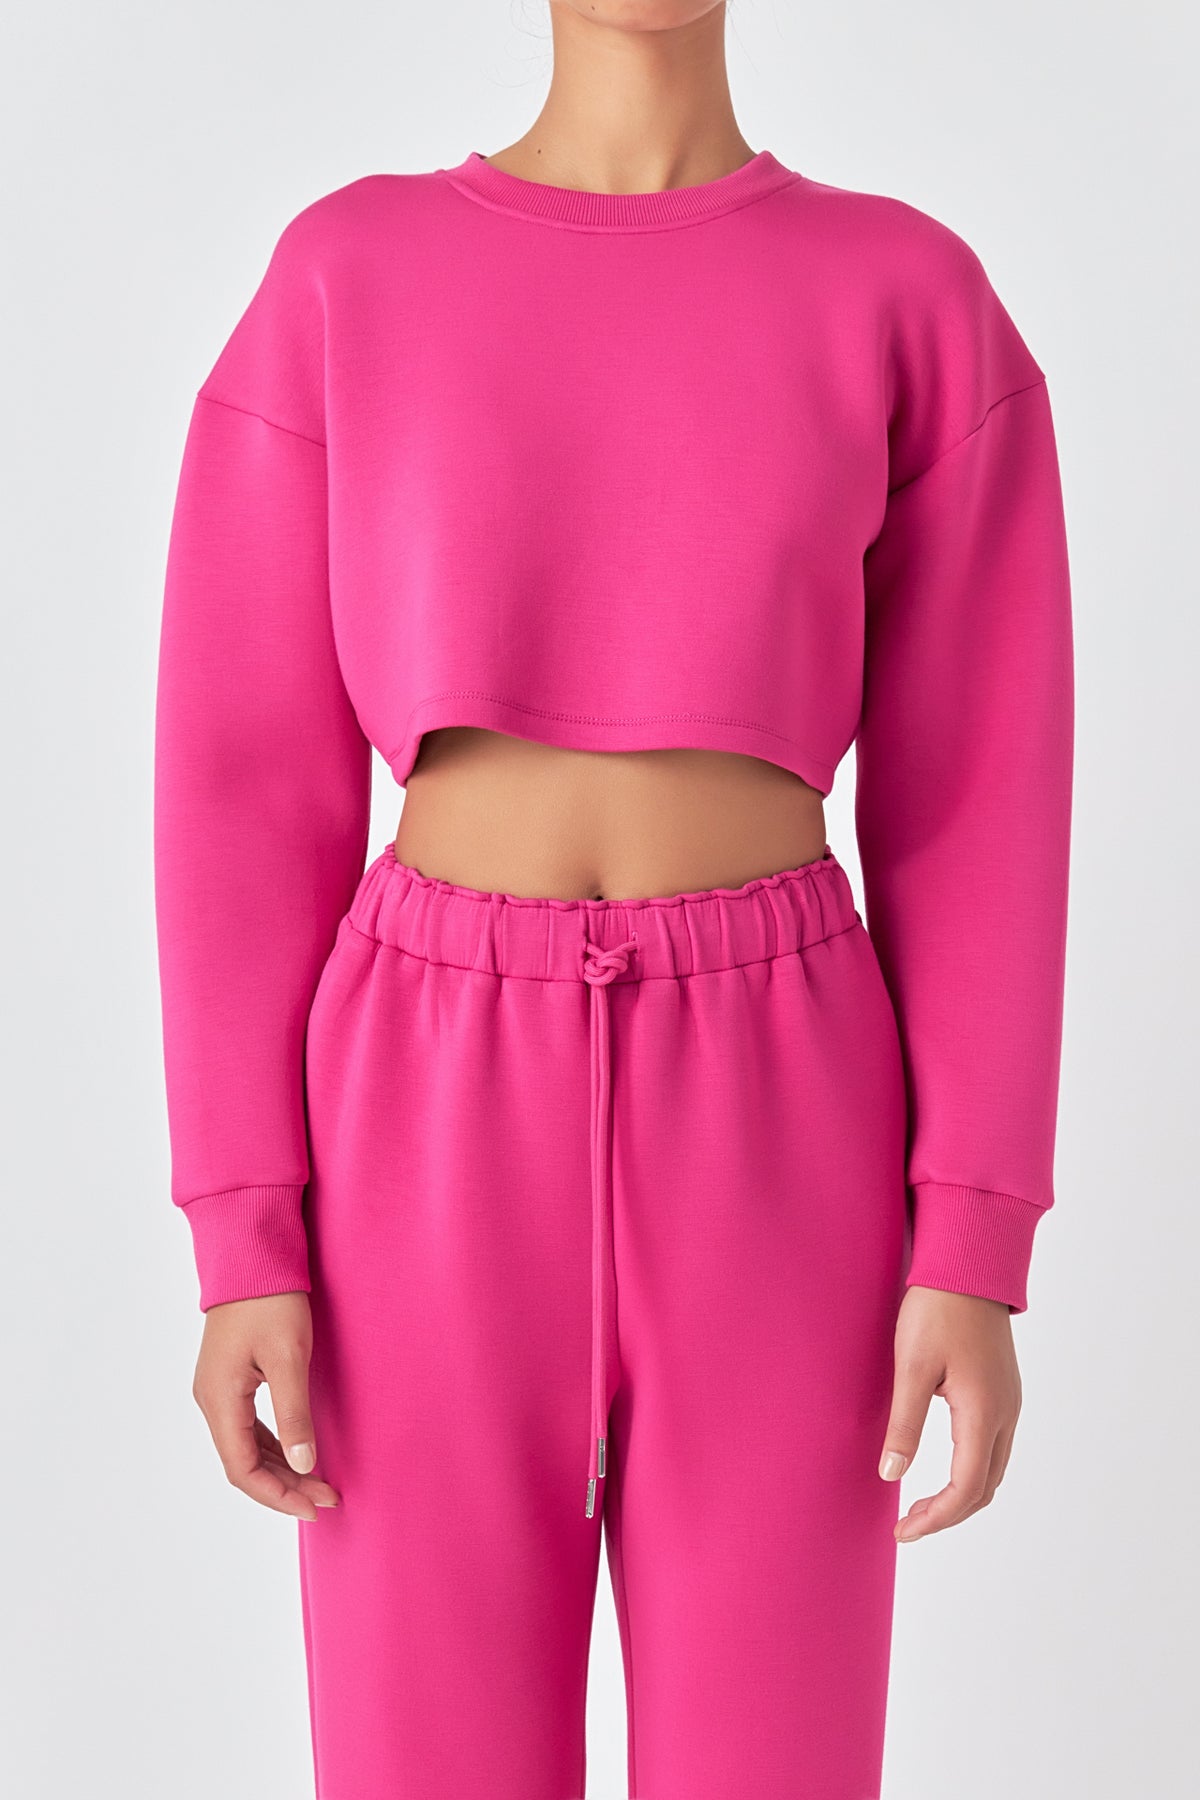 GREY LAB - Loungewear Cropped Sweatshirt - HOODIES & SWEATSHIRTS available at Objectrare